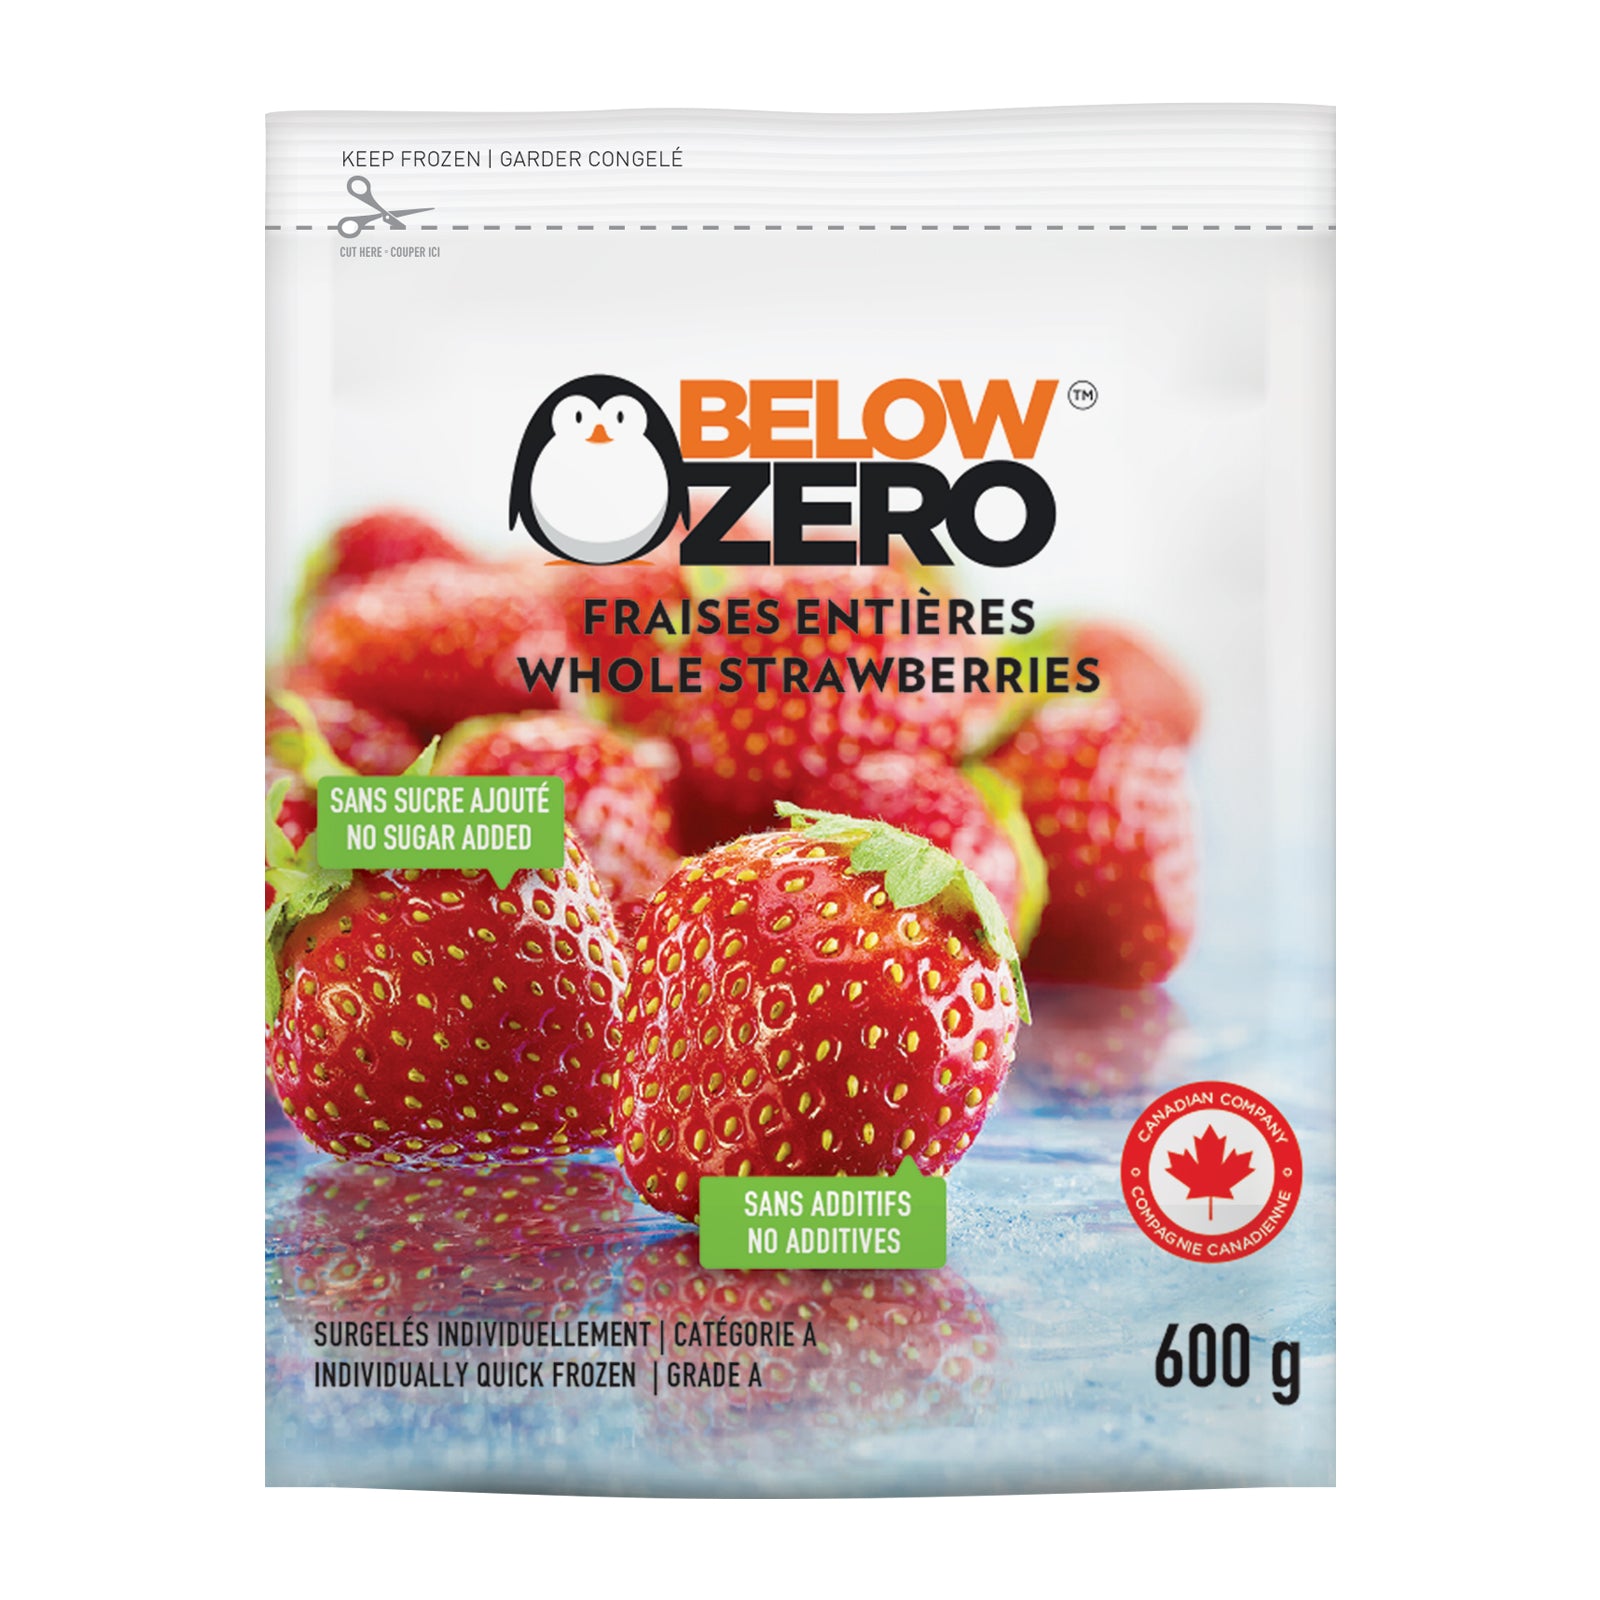 BELOW ZERO Whole strawberries